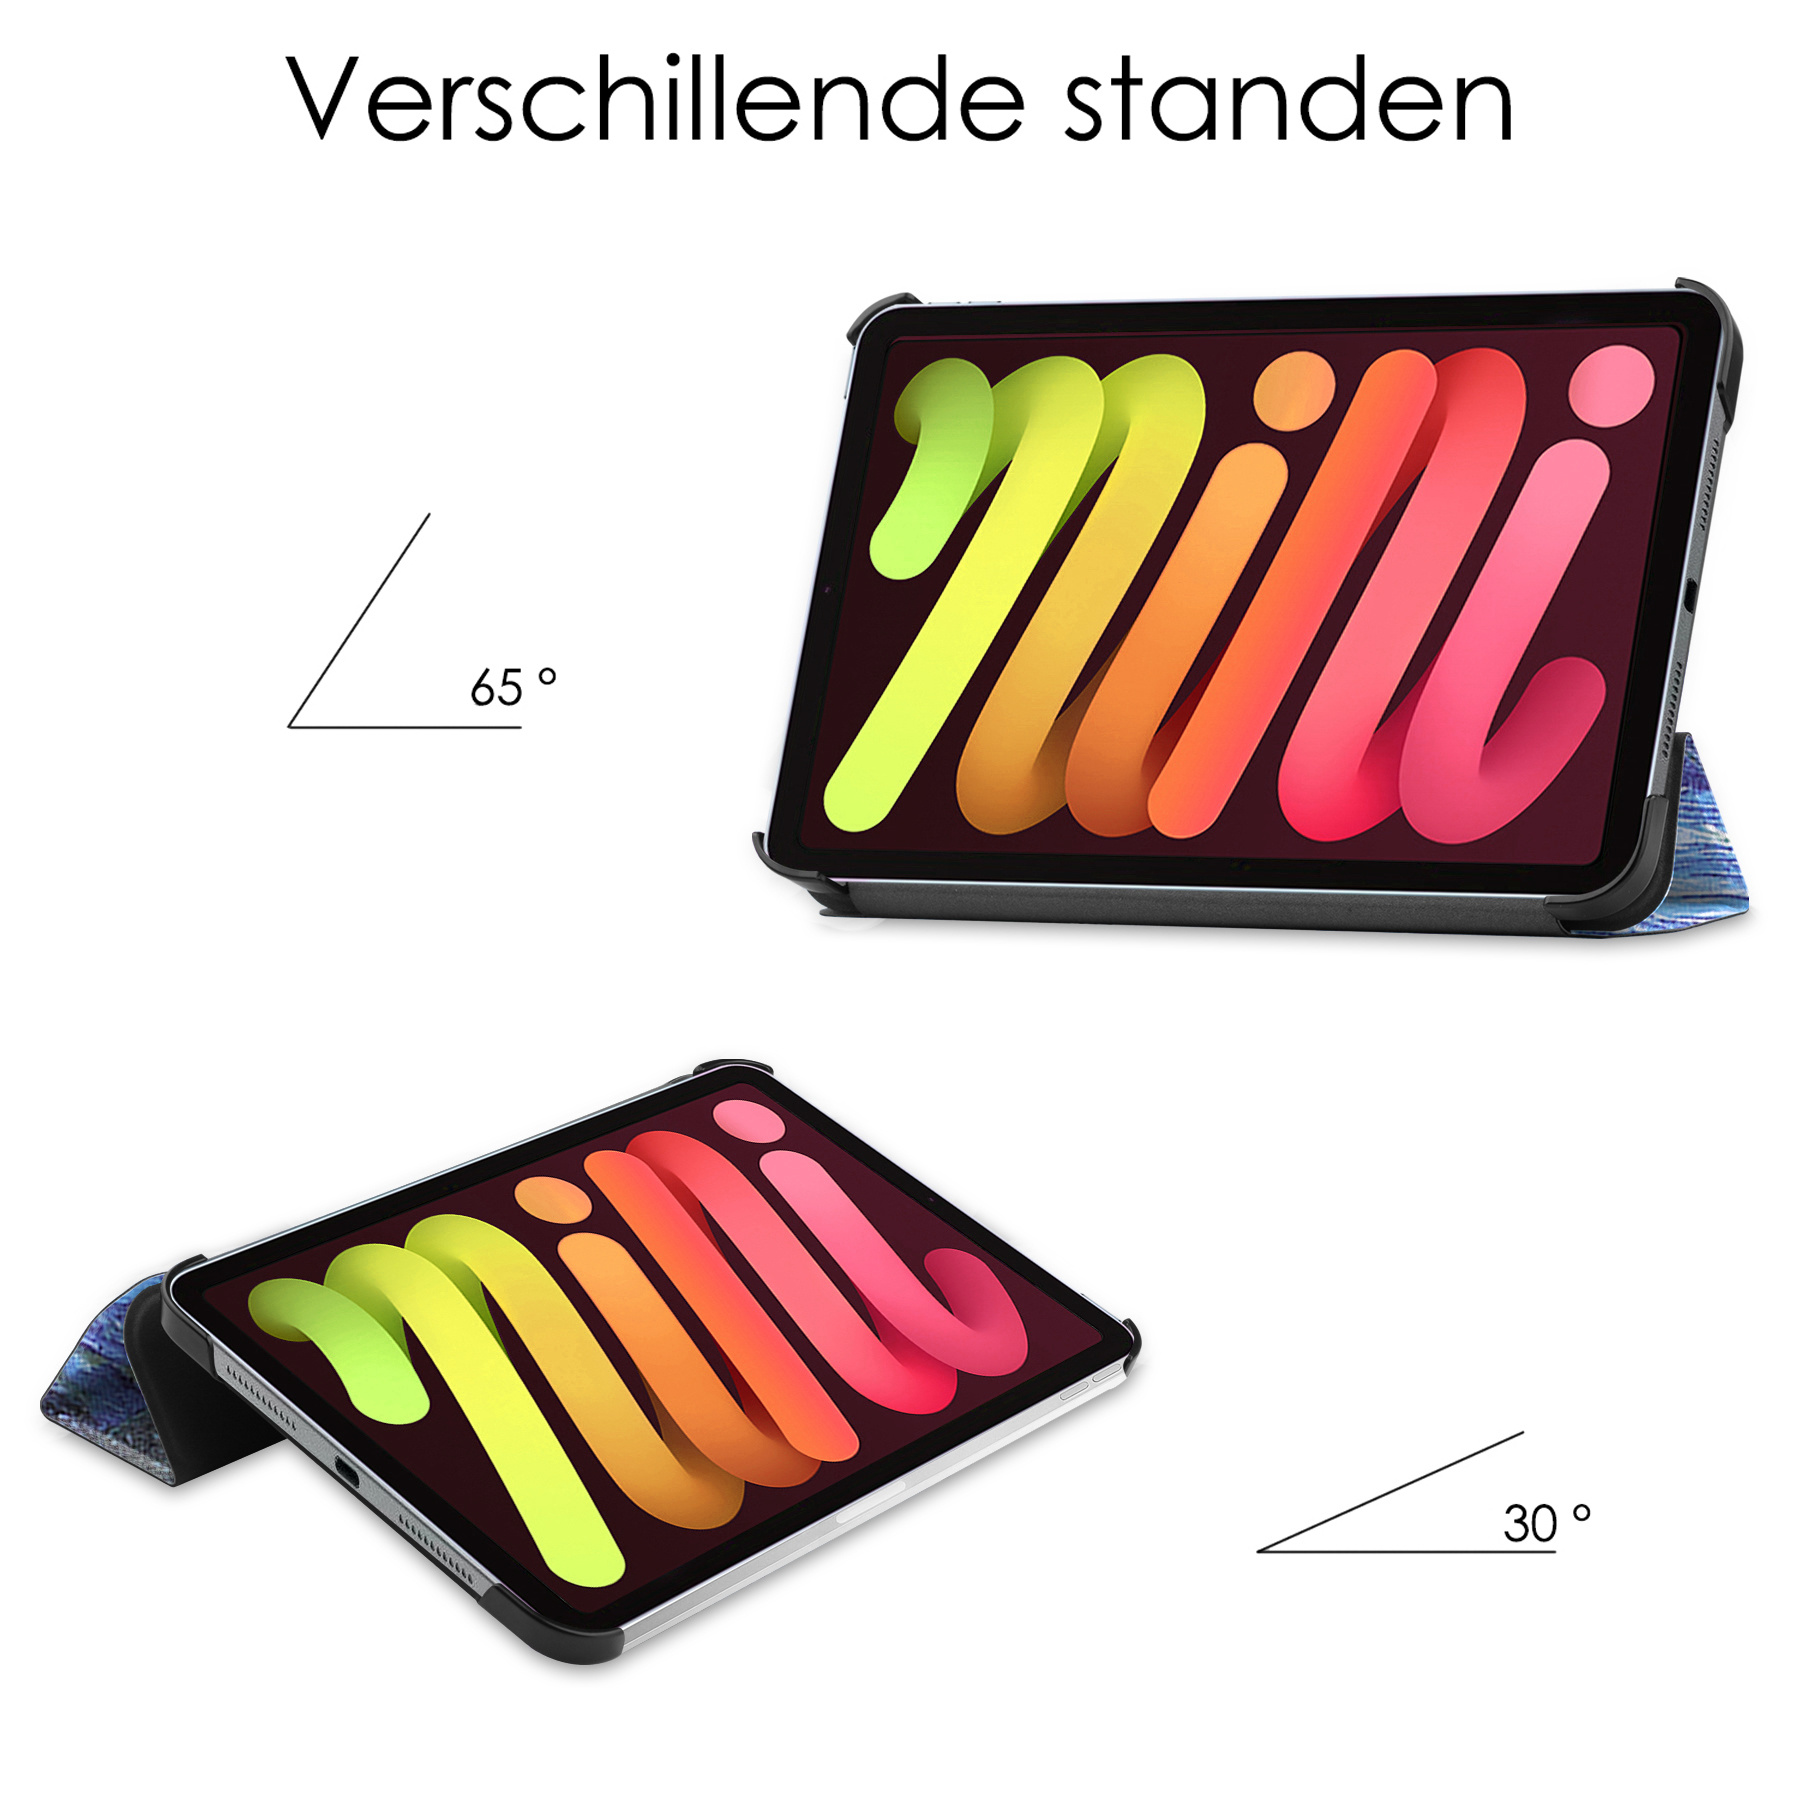 NoXx iPad Mini 6 Hoesje Plus Screenprotector Book Case Cover Plus Screen Protector - Sterrenhemel